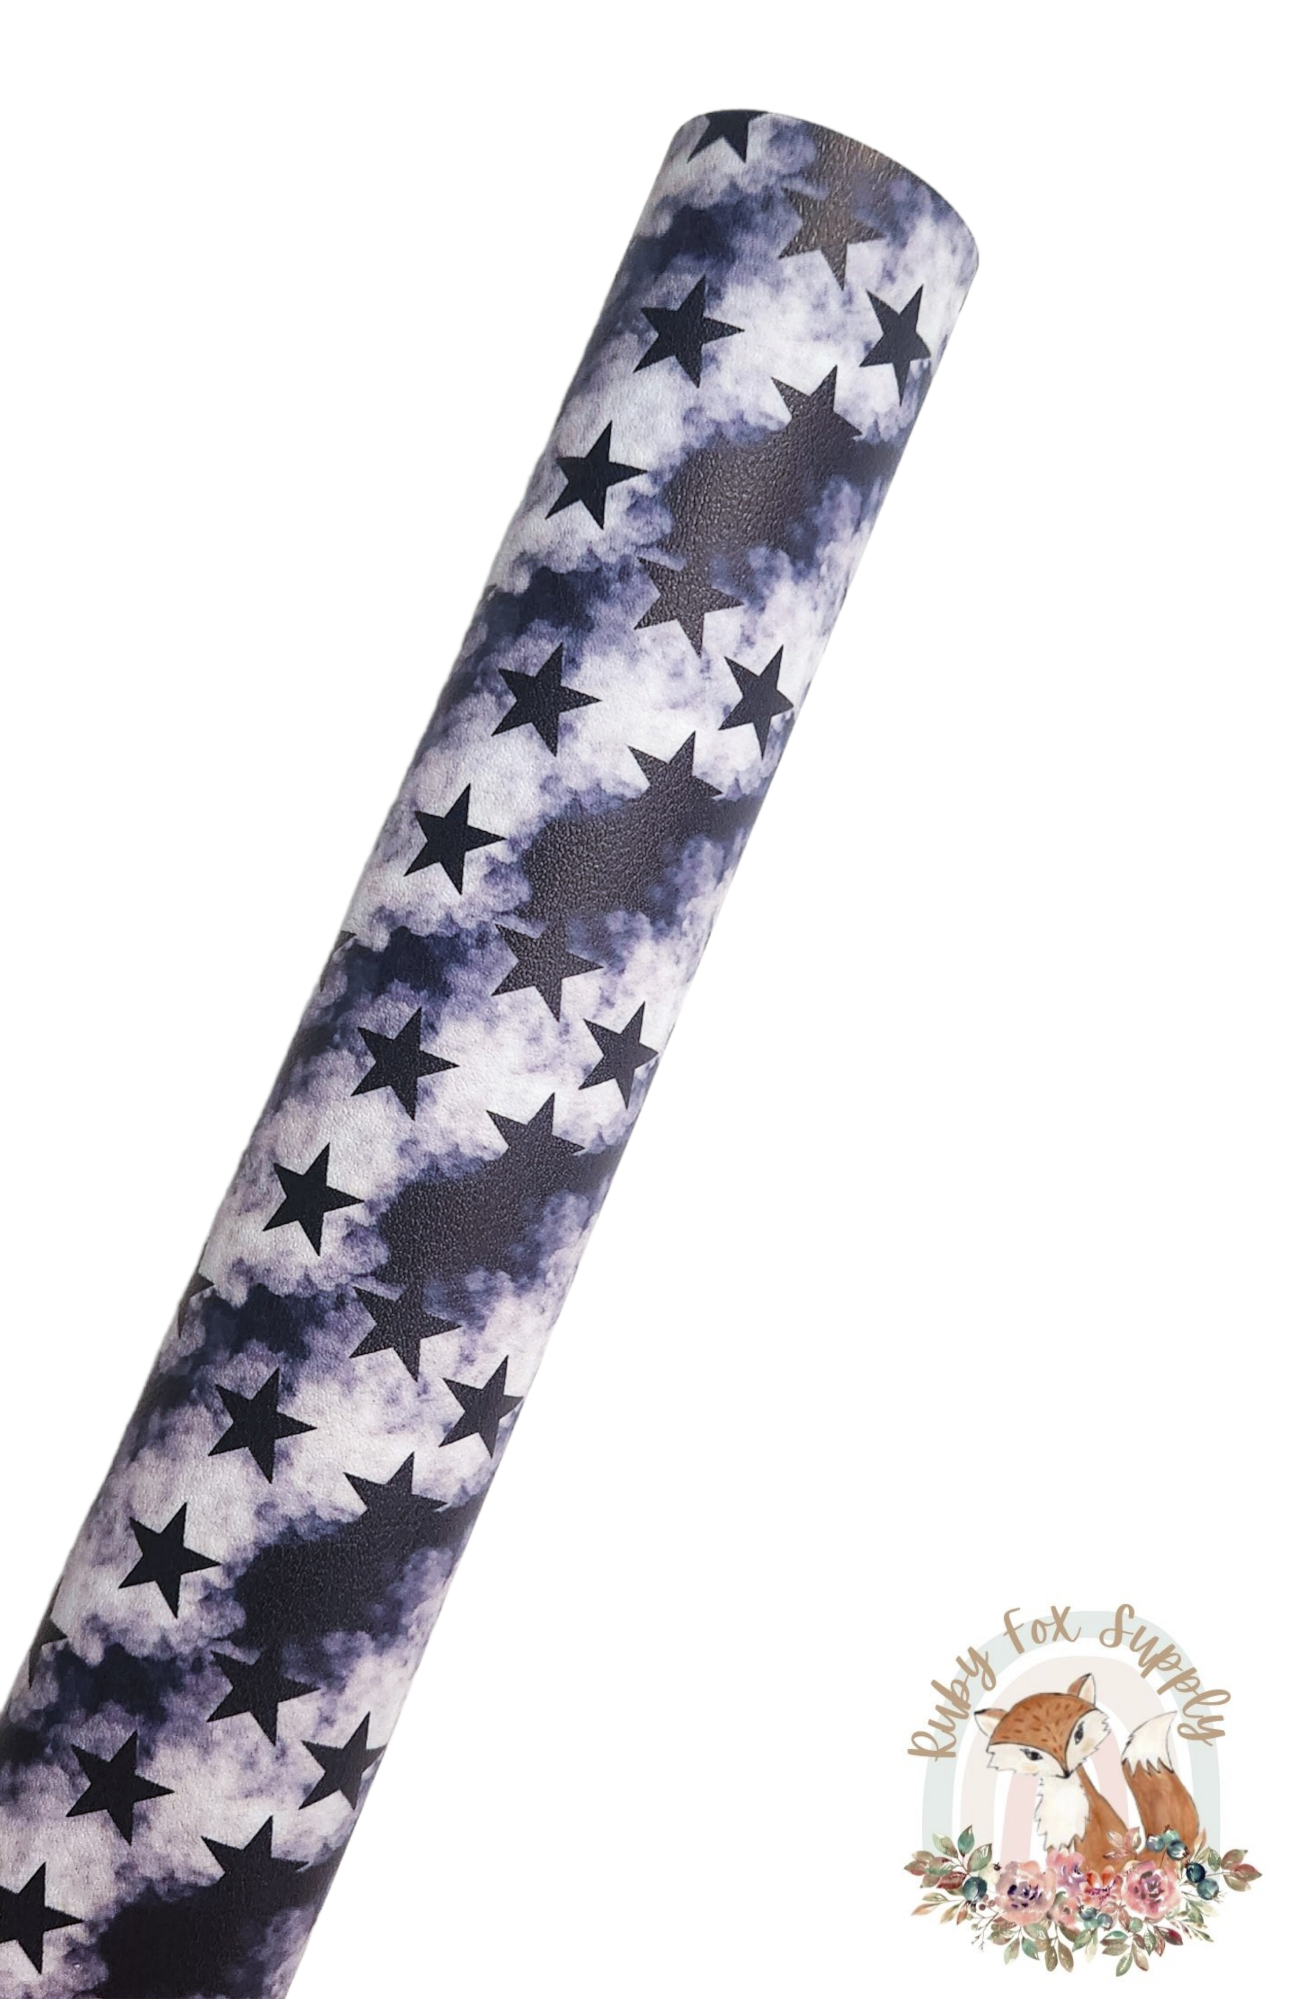 BW Tie Dye Stars 9x12 faux leather sheet